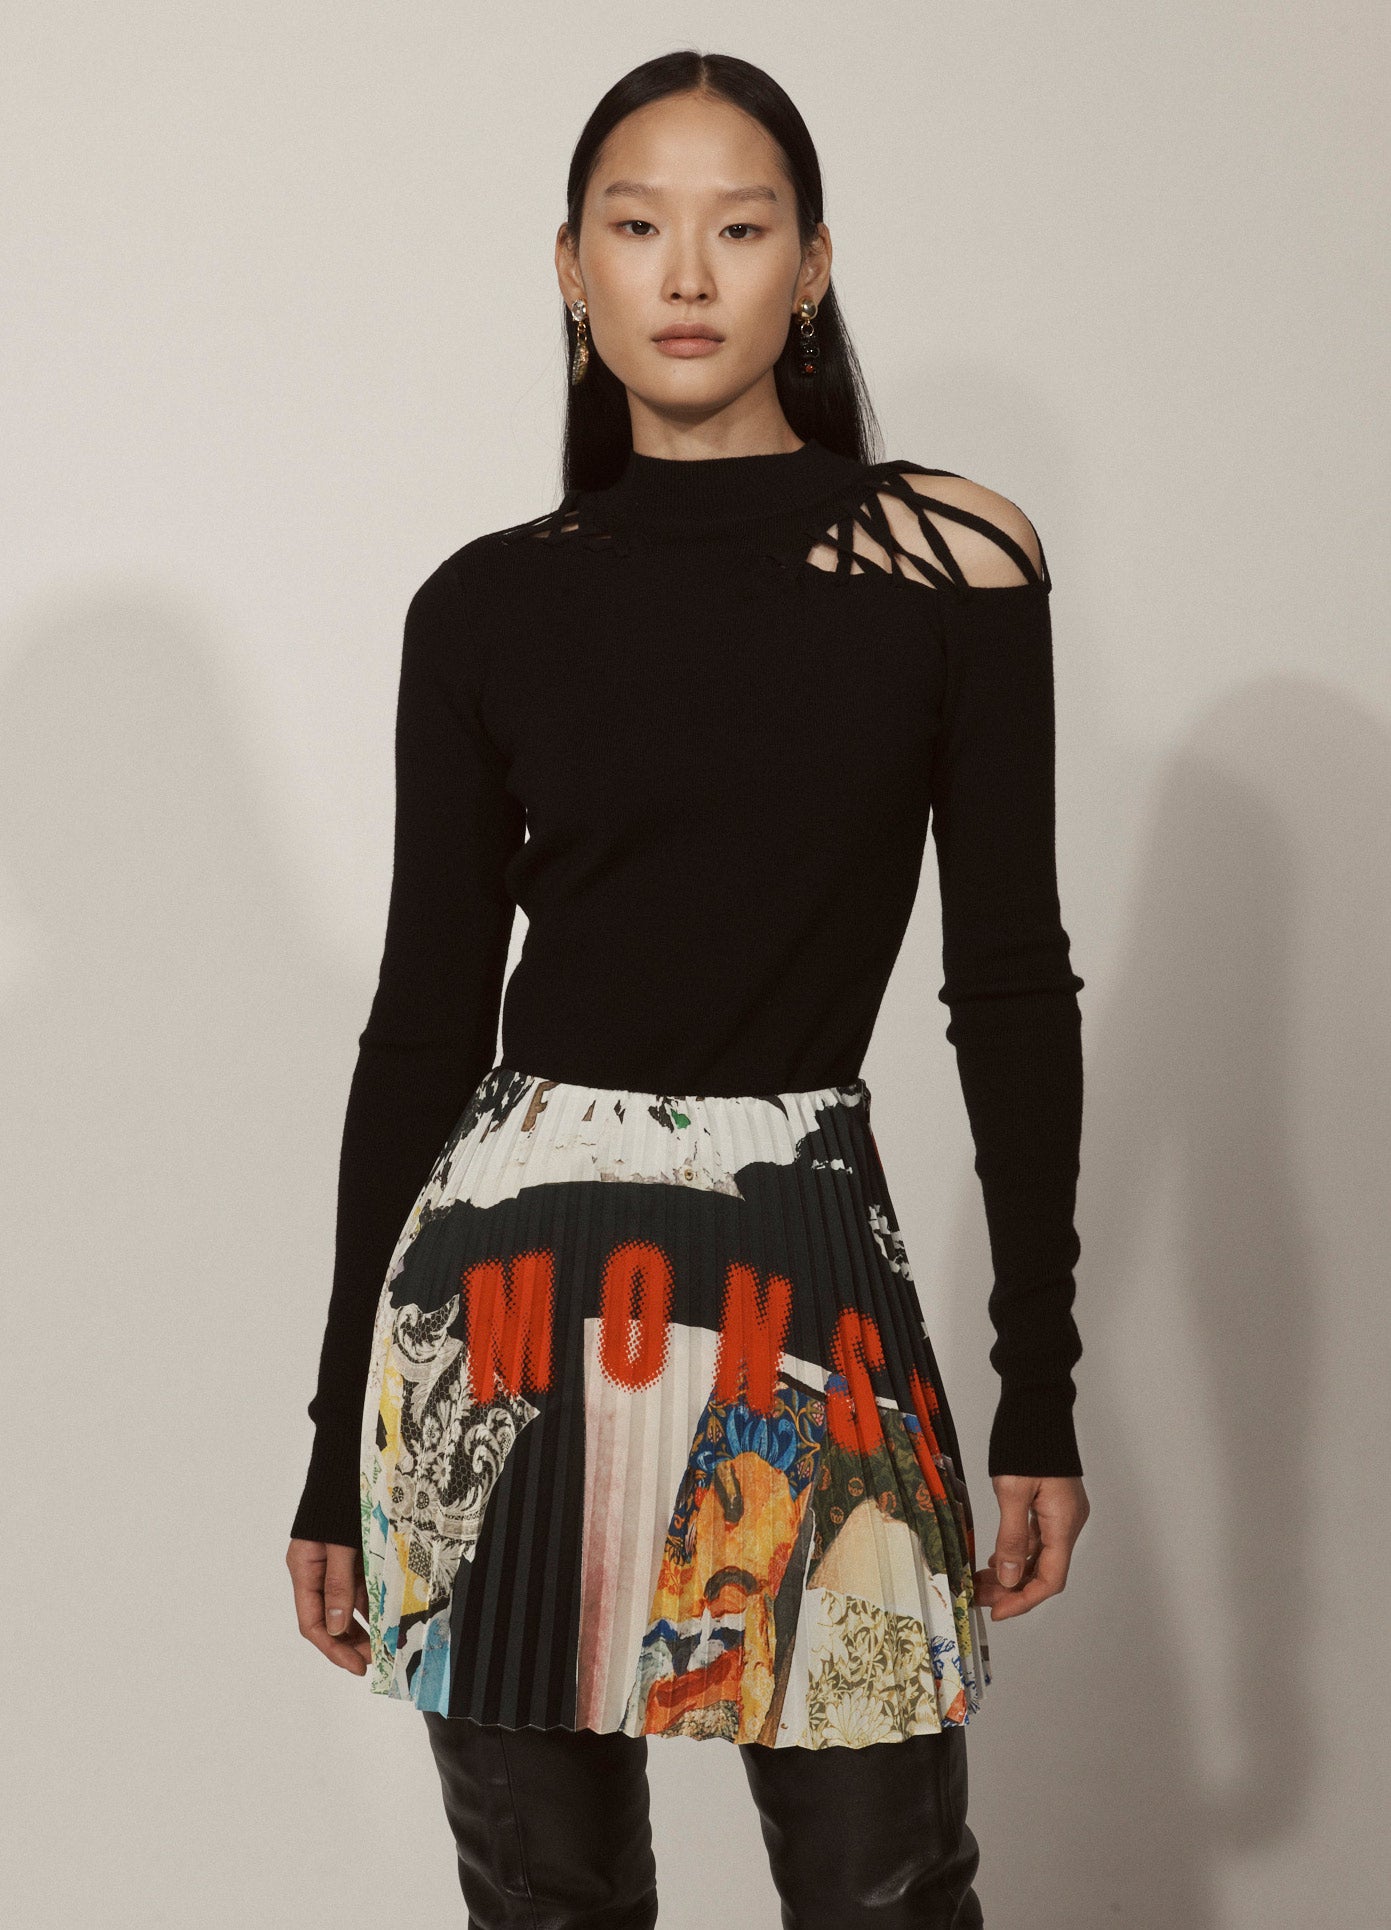 MONSE Printed Pleated Skirt in Black Multi on Model Lookbook Front View